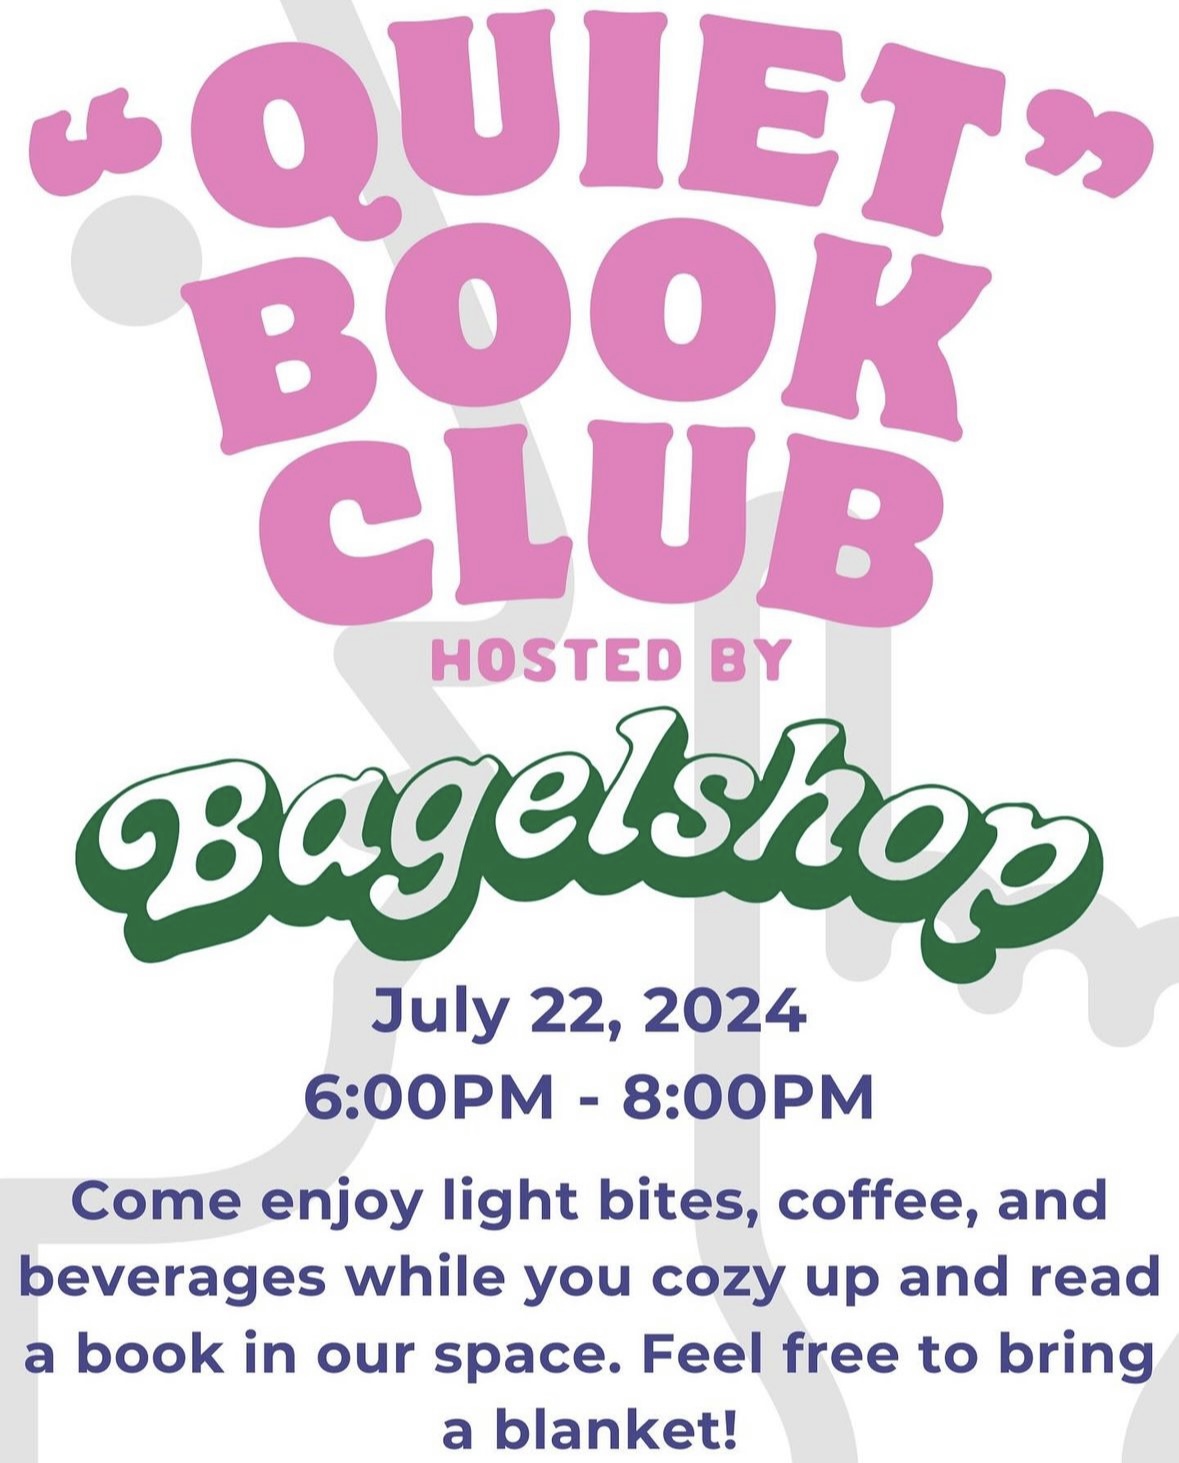 “Quiet Book Club at Bagelshop Nashville.